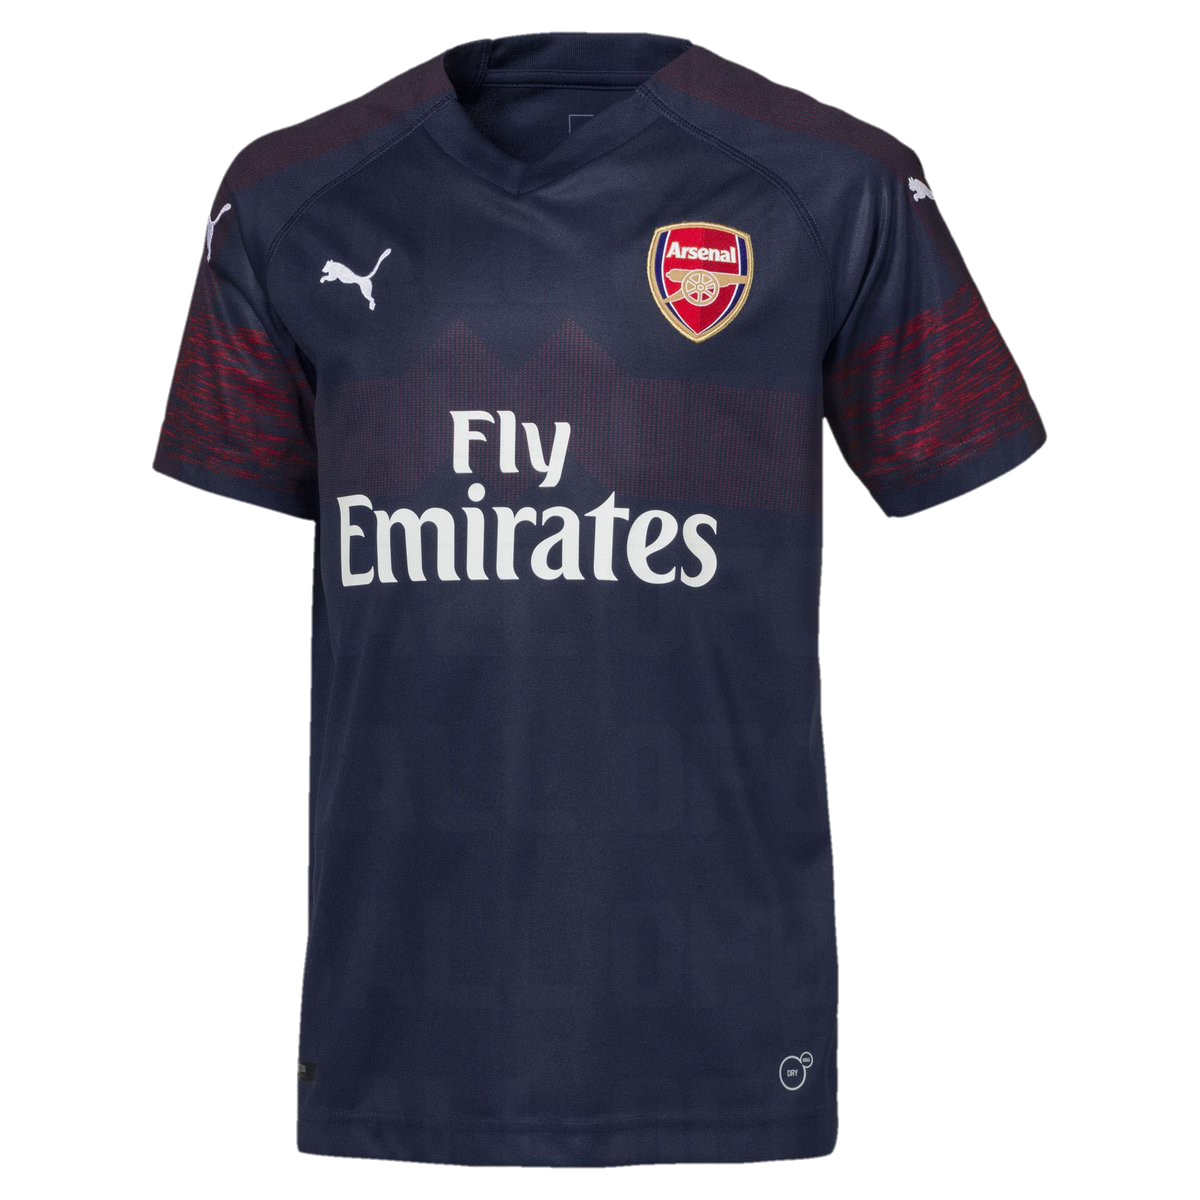 Arsenal 2019 maillot exterieur Puma 18 19 officiel